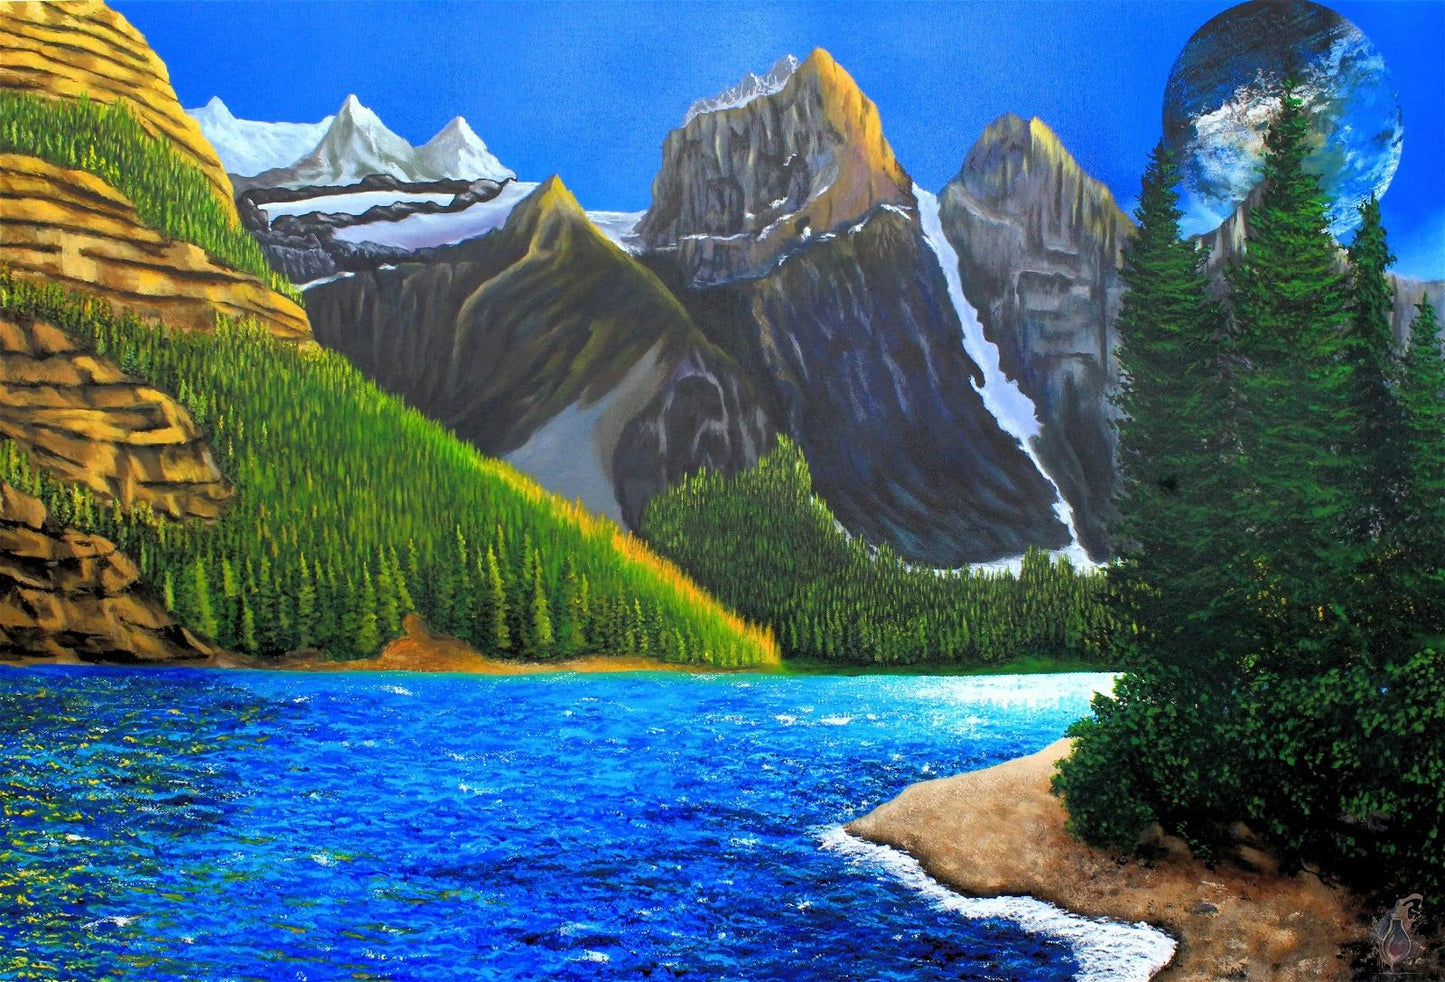 Somewhere - Tranquil mountain landscape painting - EKK Candle Art